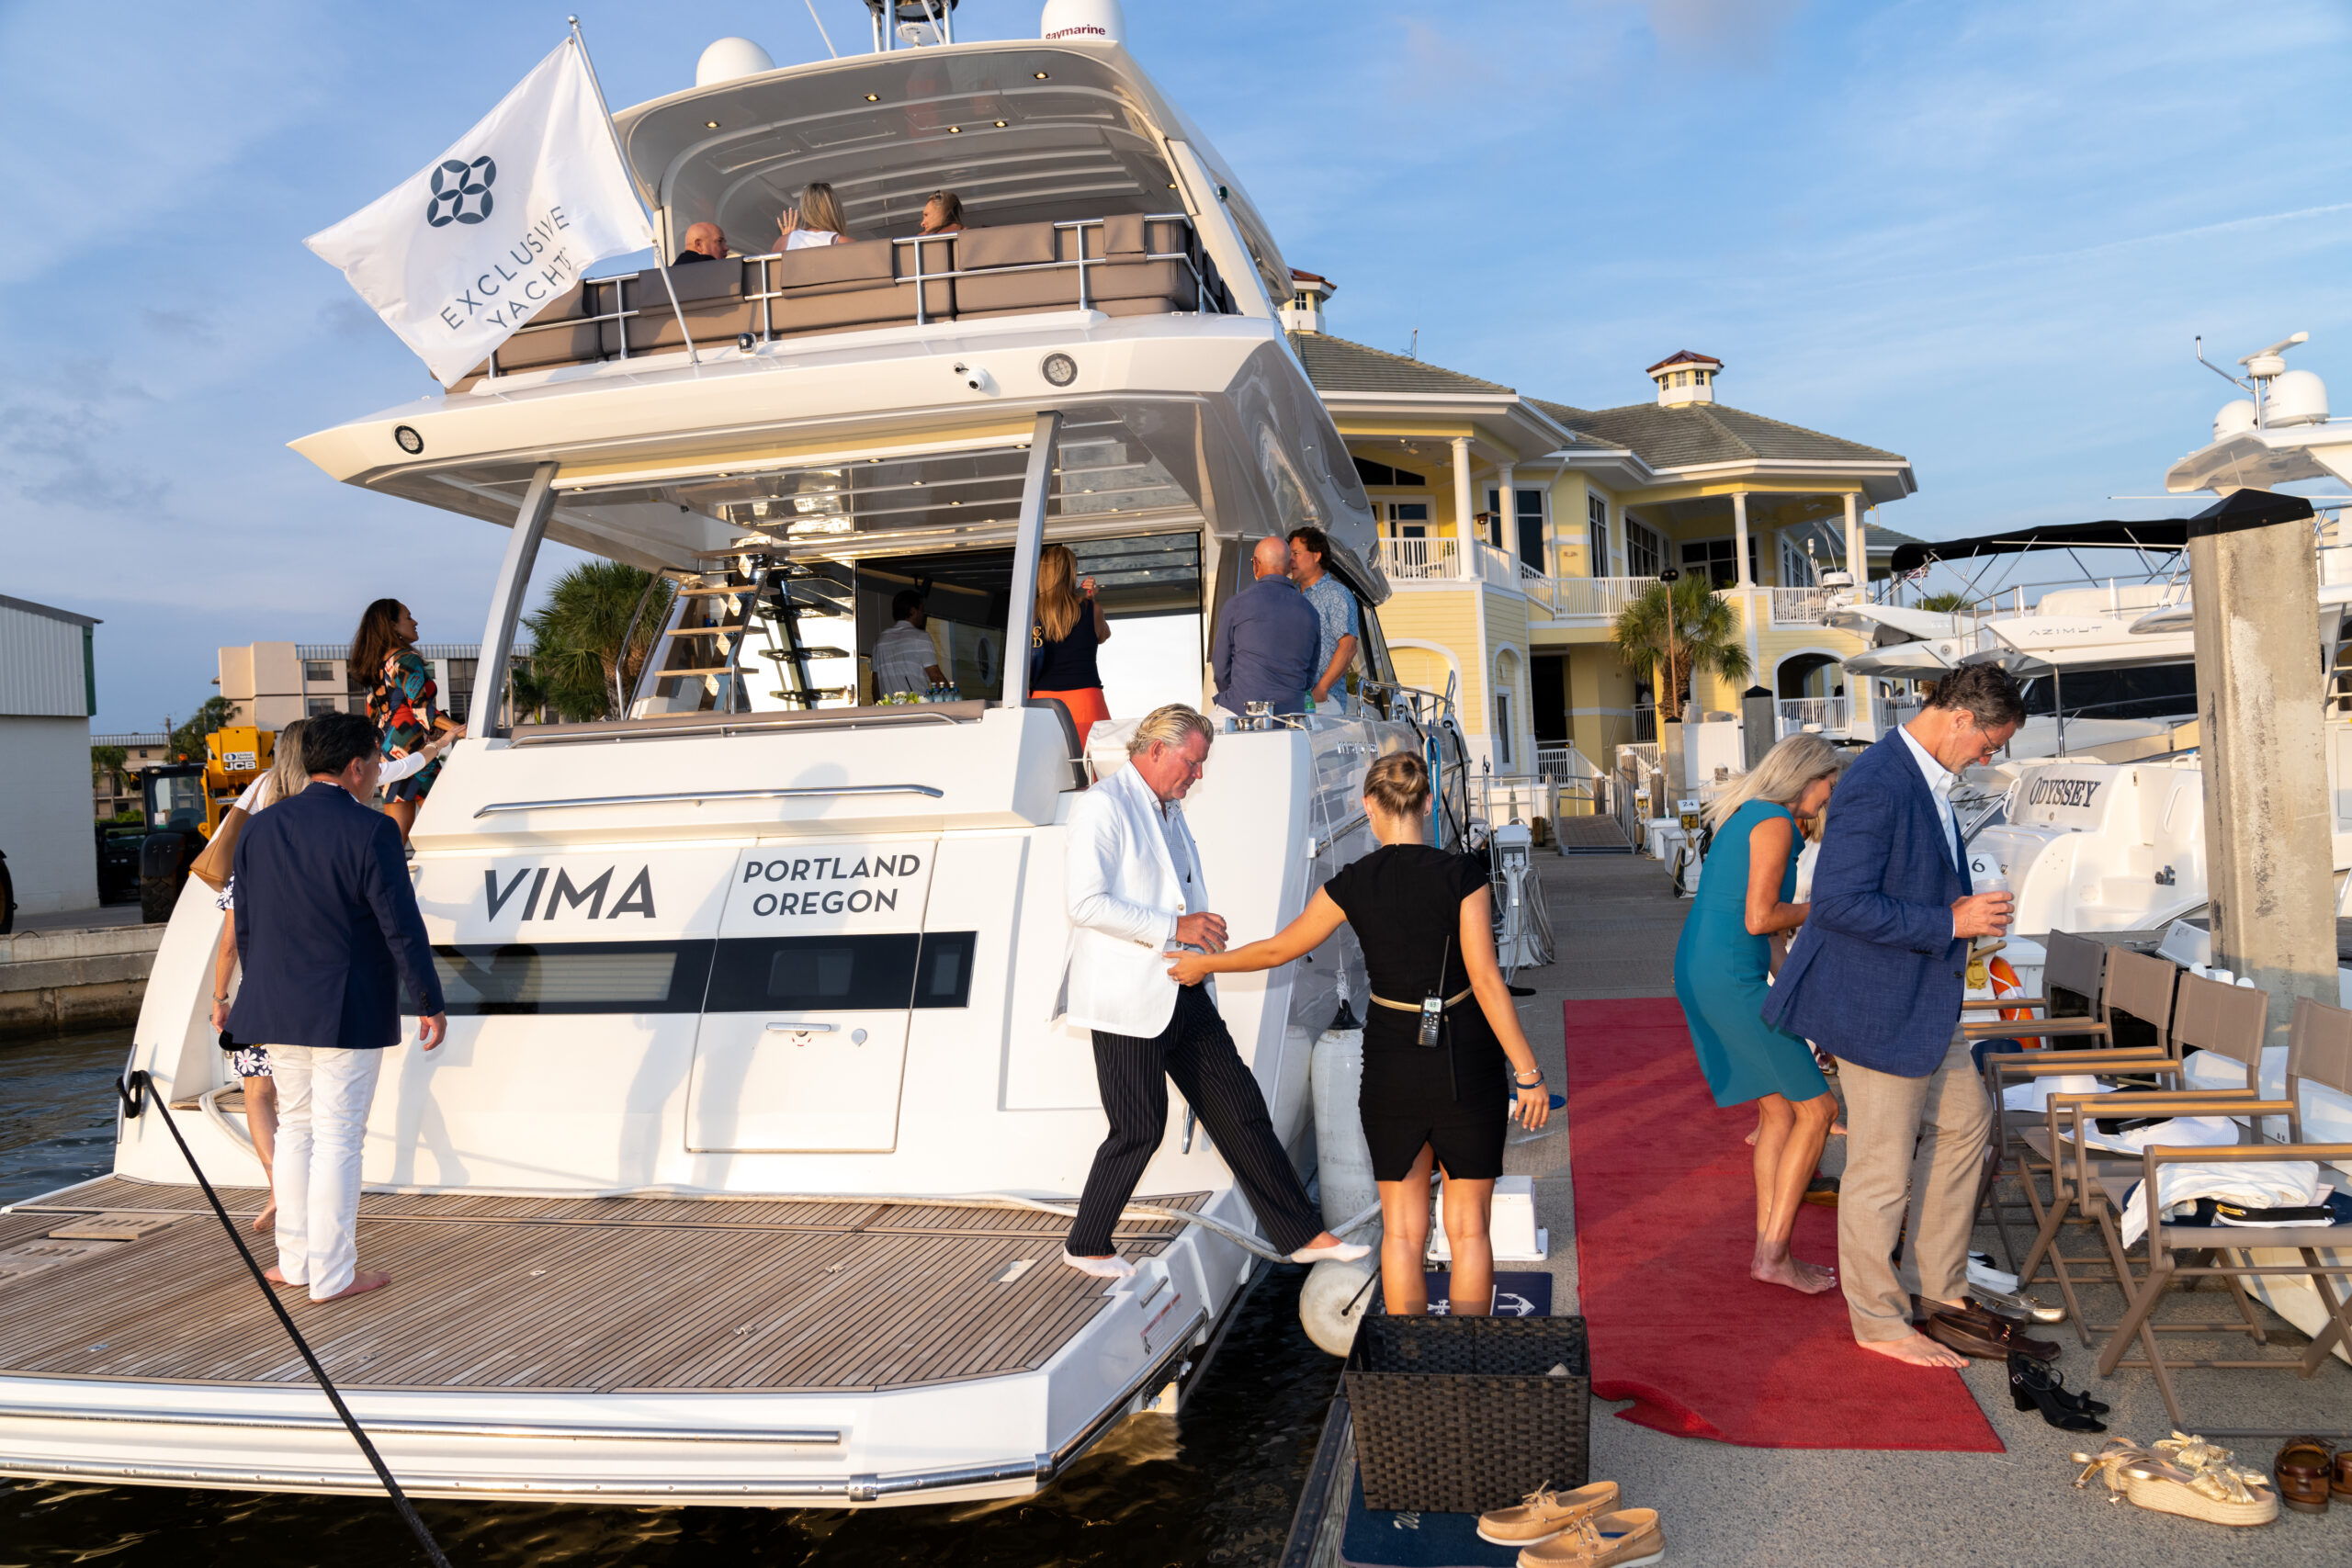 naples yacht club membership cost